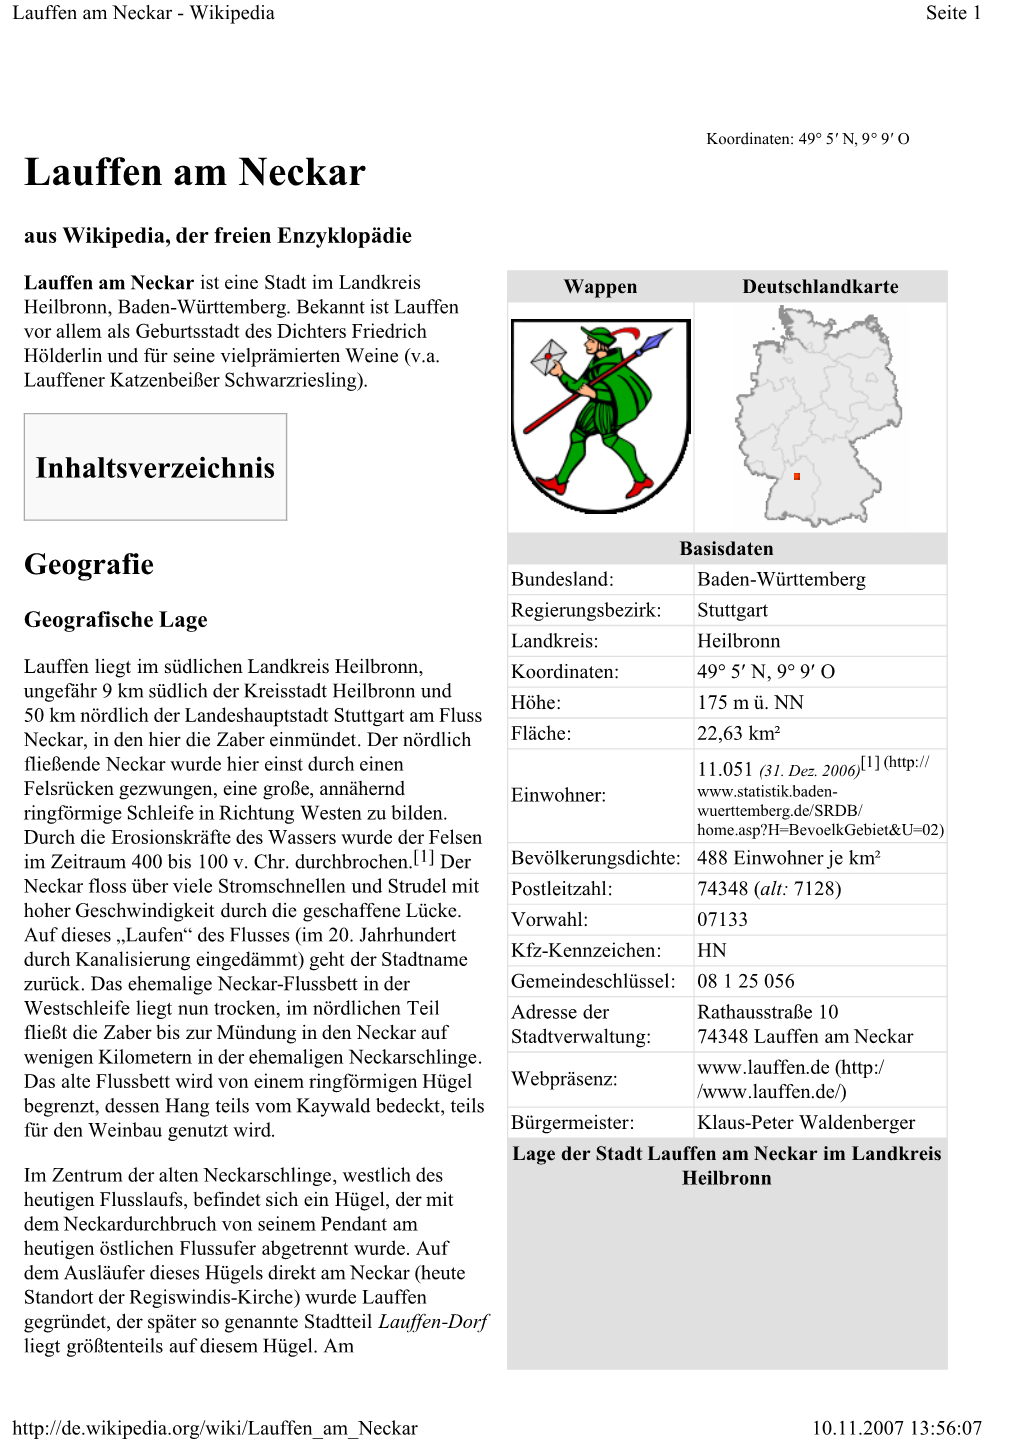 Lauffen Am Neckar - Wikipedia Seite 1